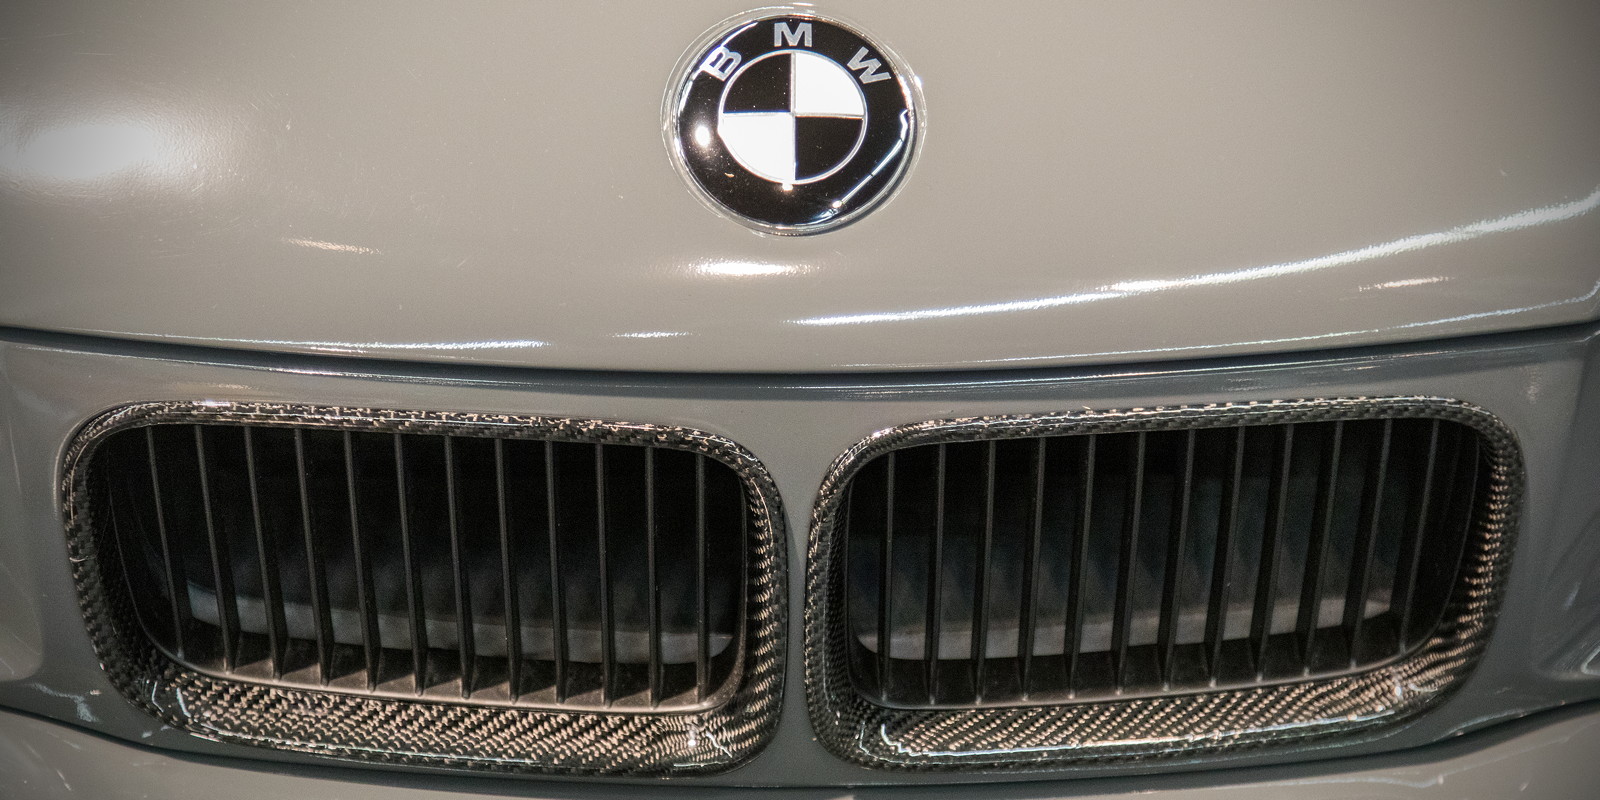 Foto: BMW 320i (Modell E36), BMW Emblem in schwarz, Nierenrahmen